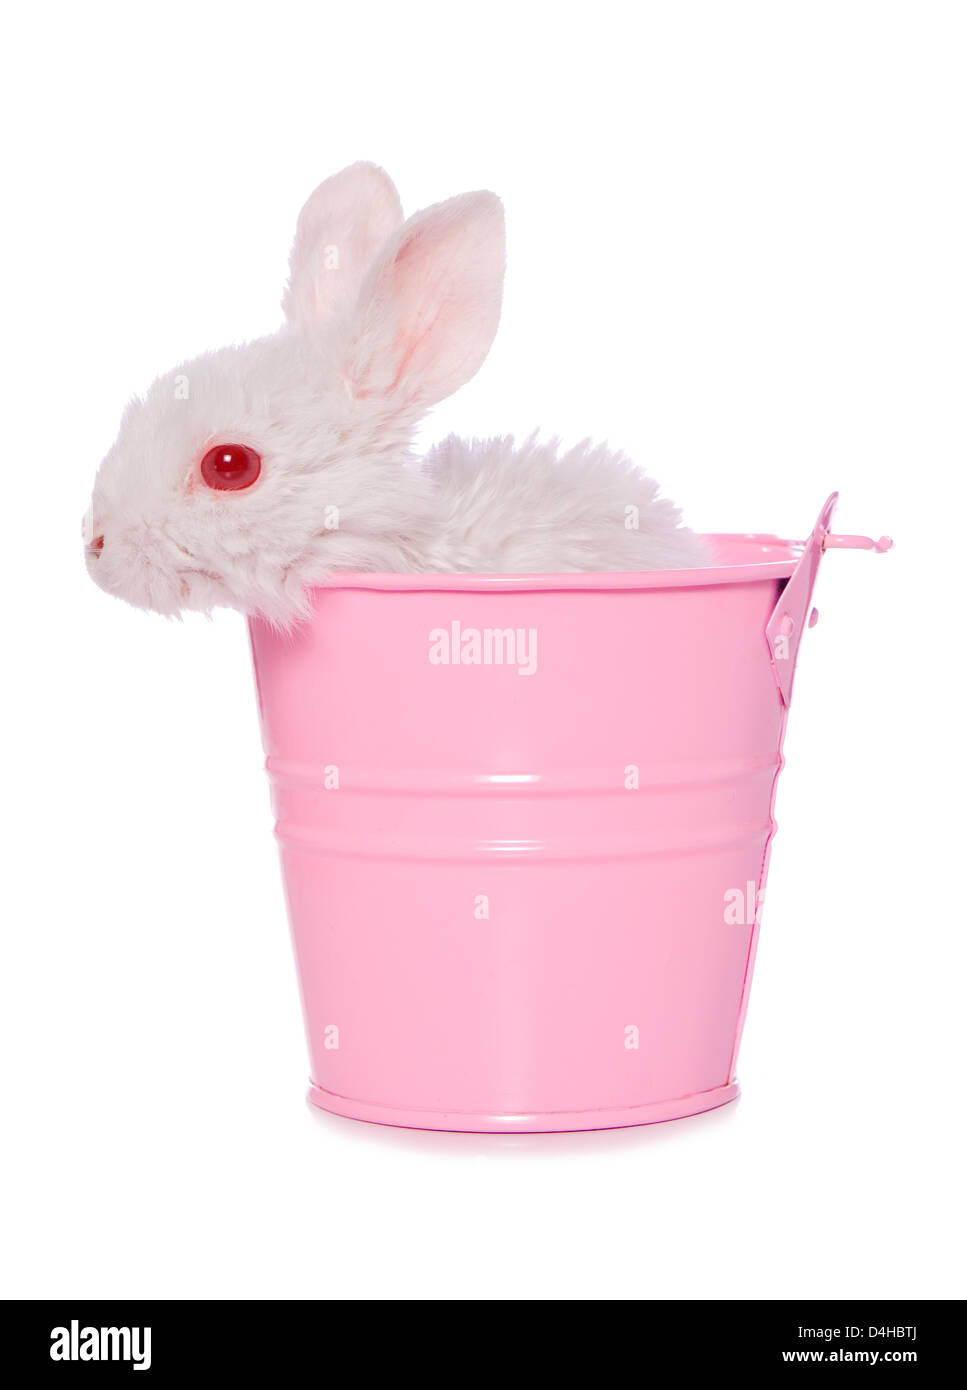 White rabbit in a pink bucket studio cutout Stock Photo